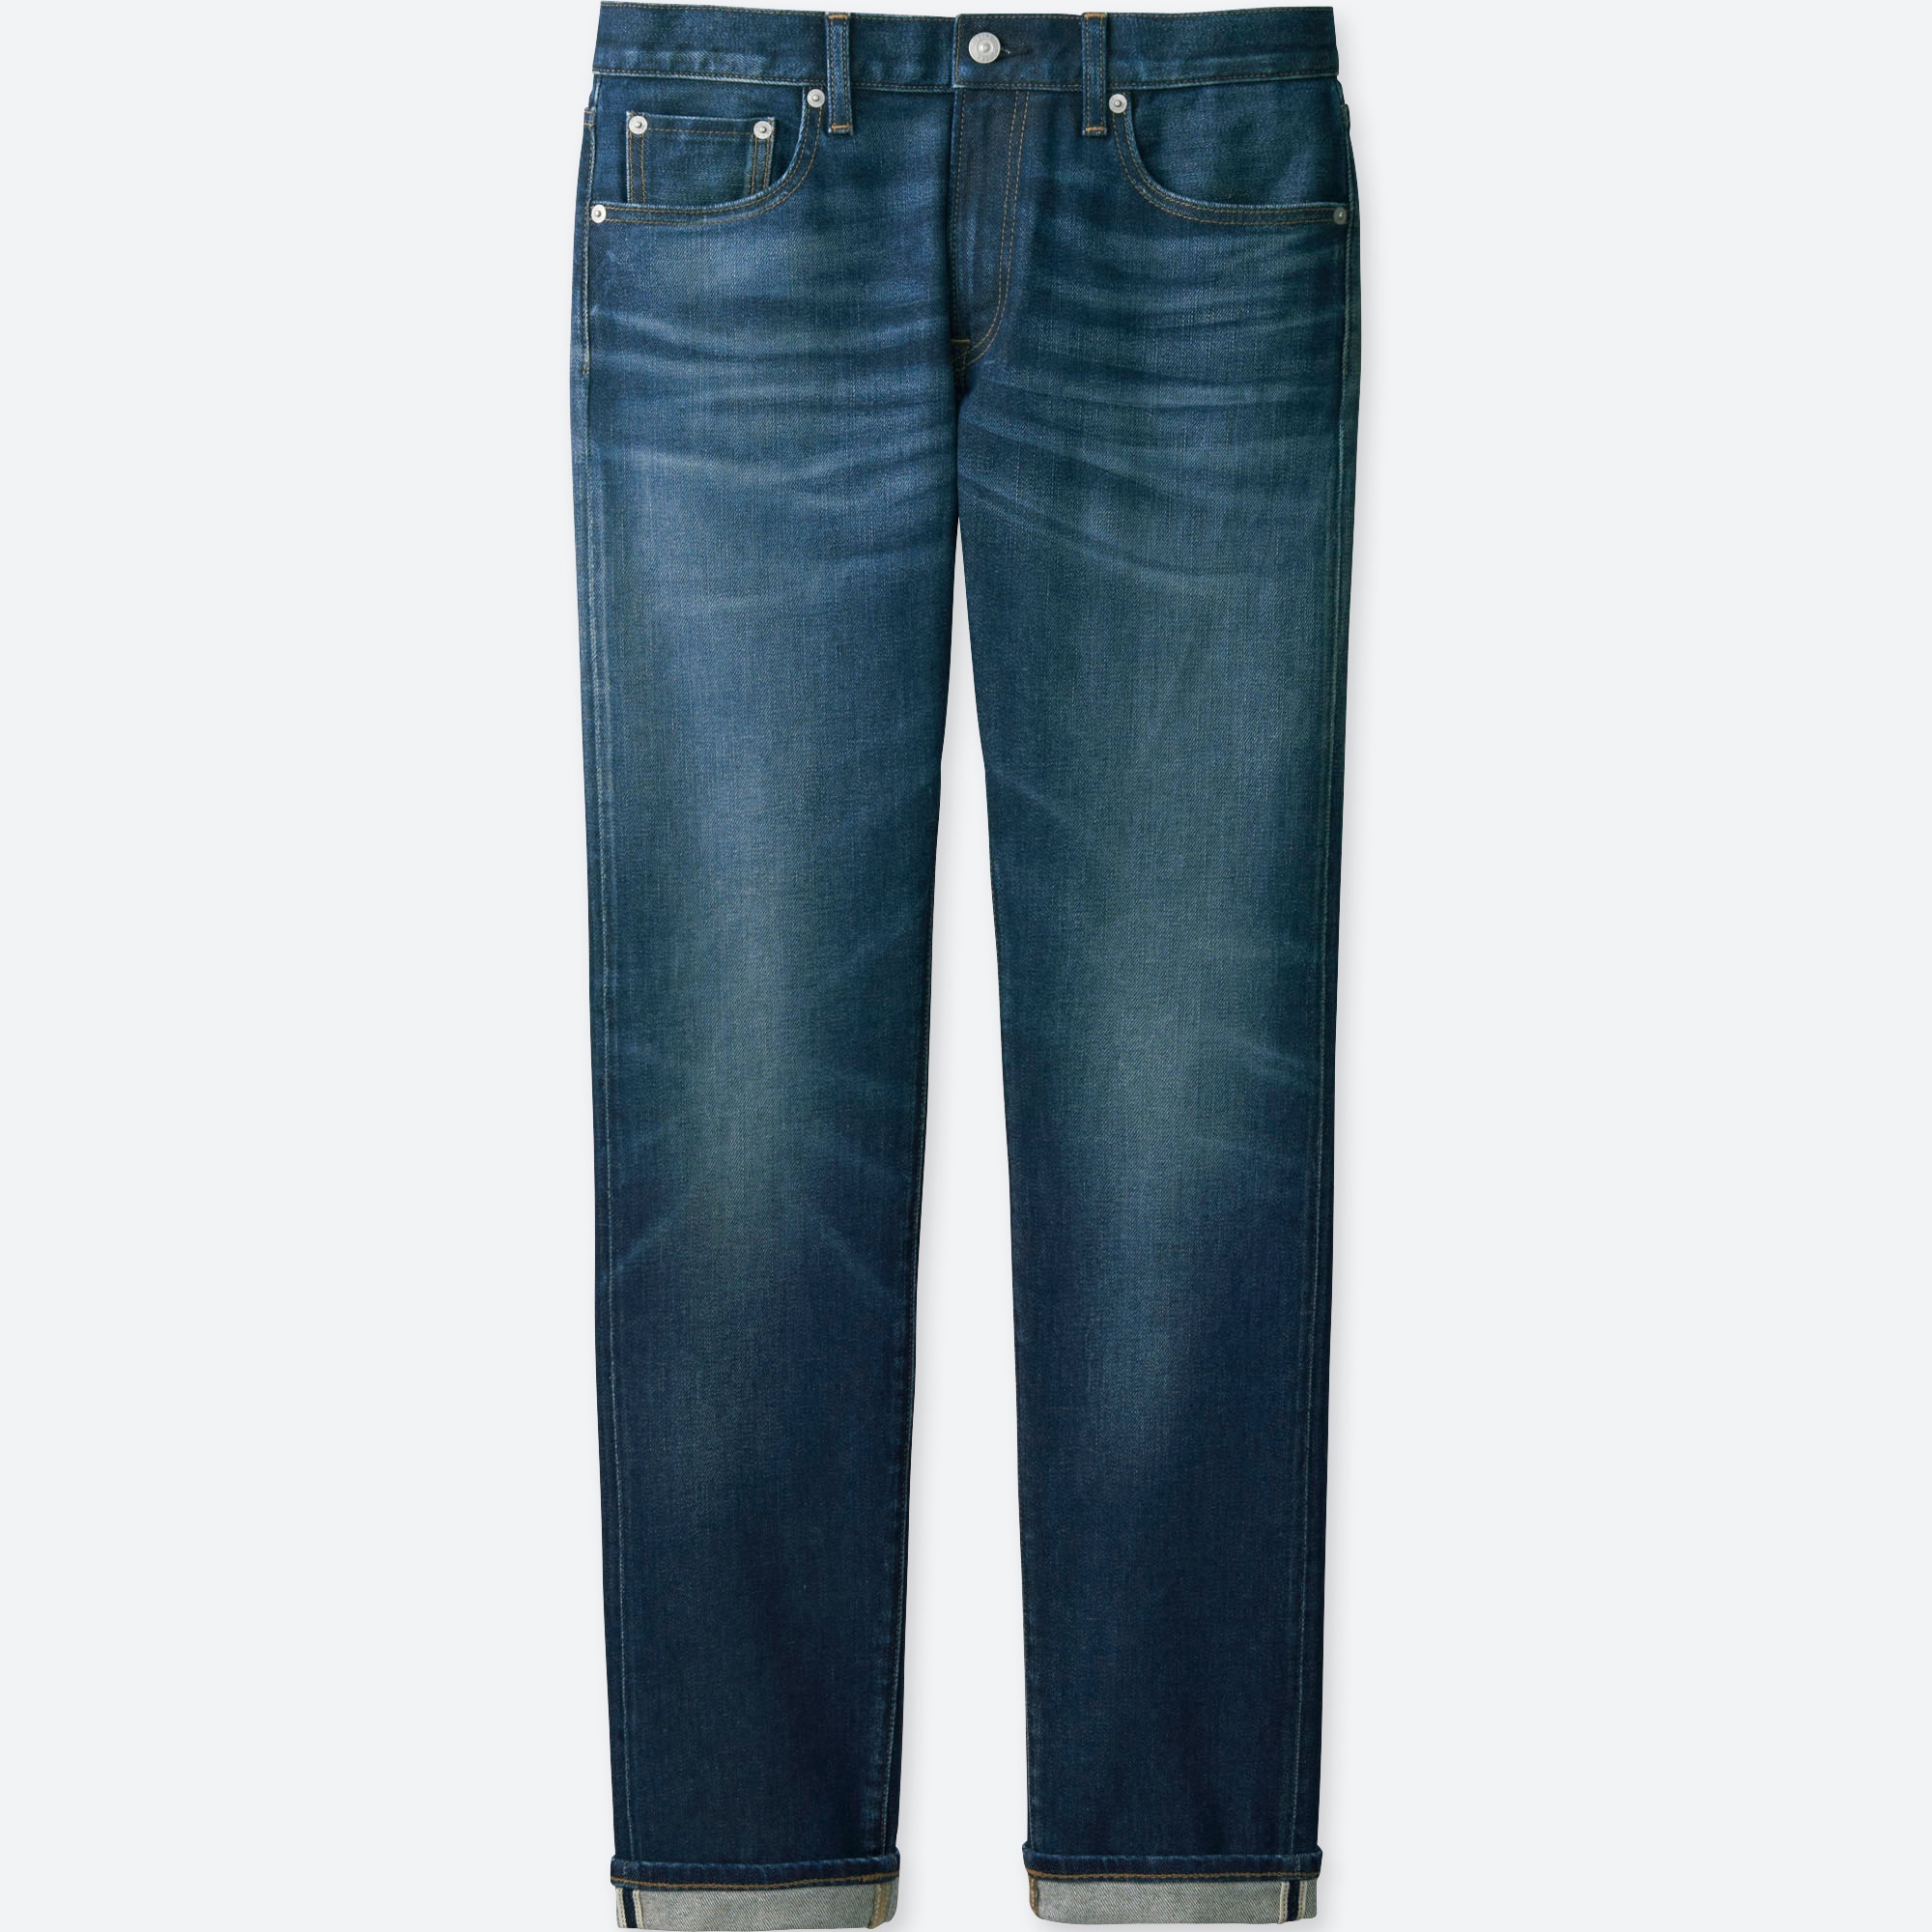 uniqlo selvedge jeans review